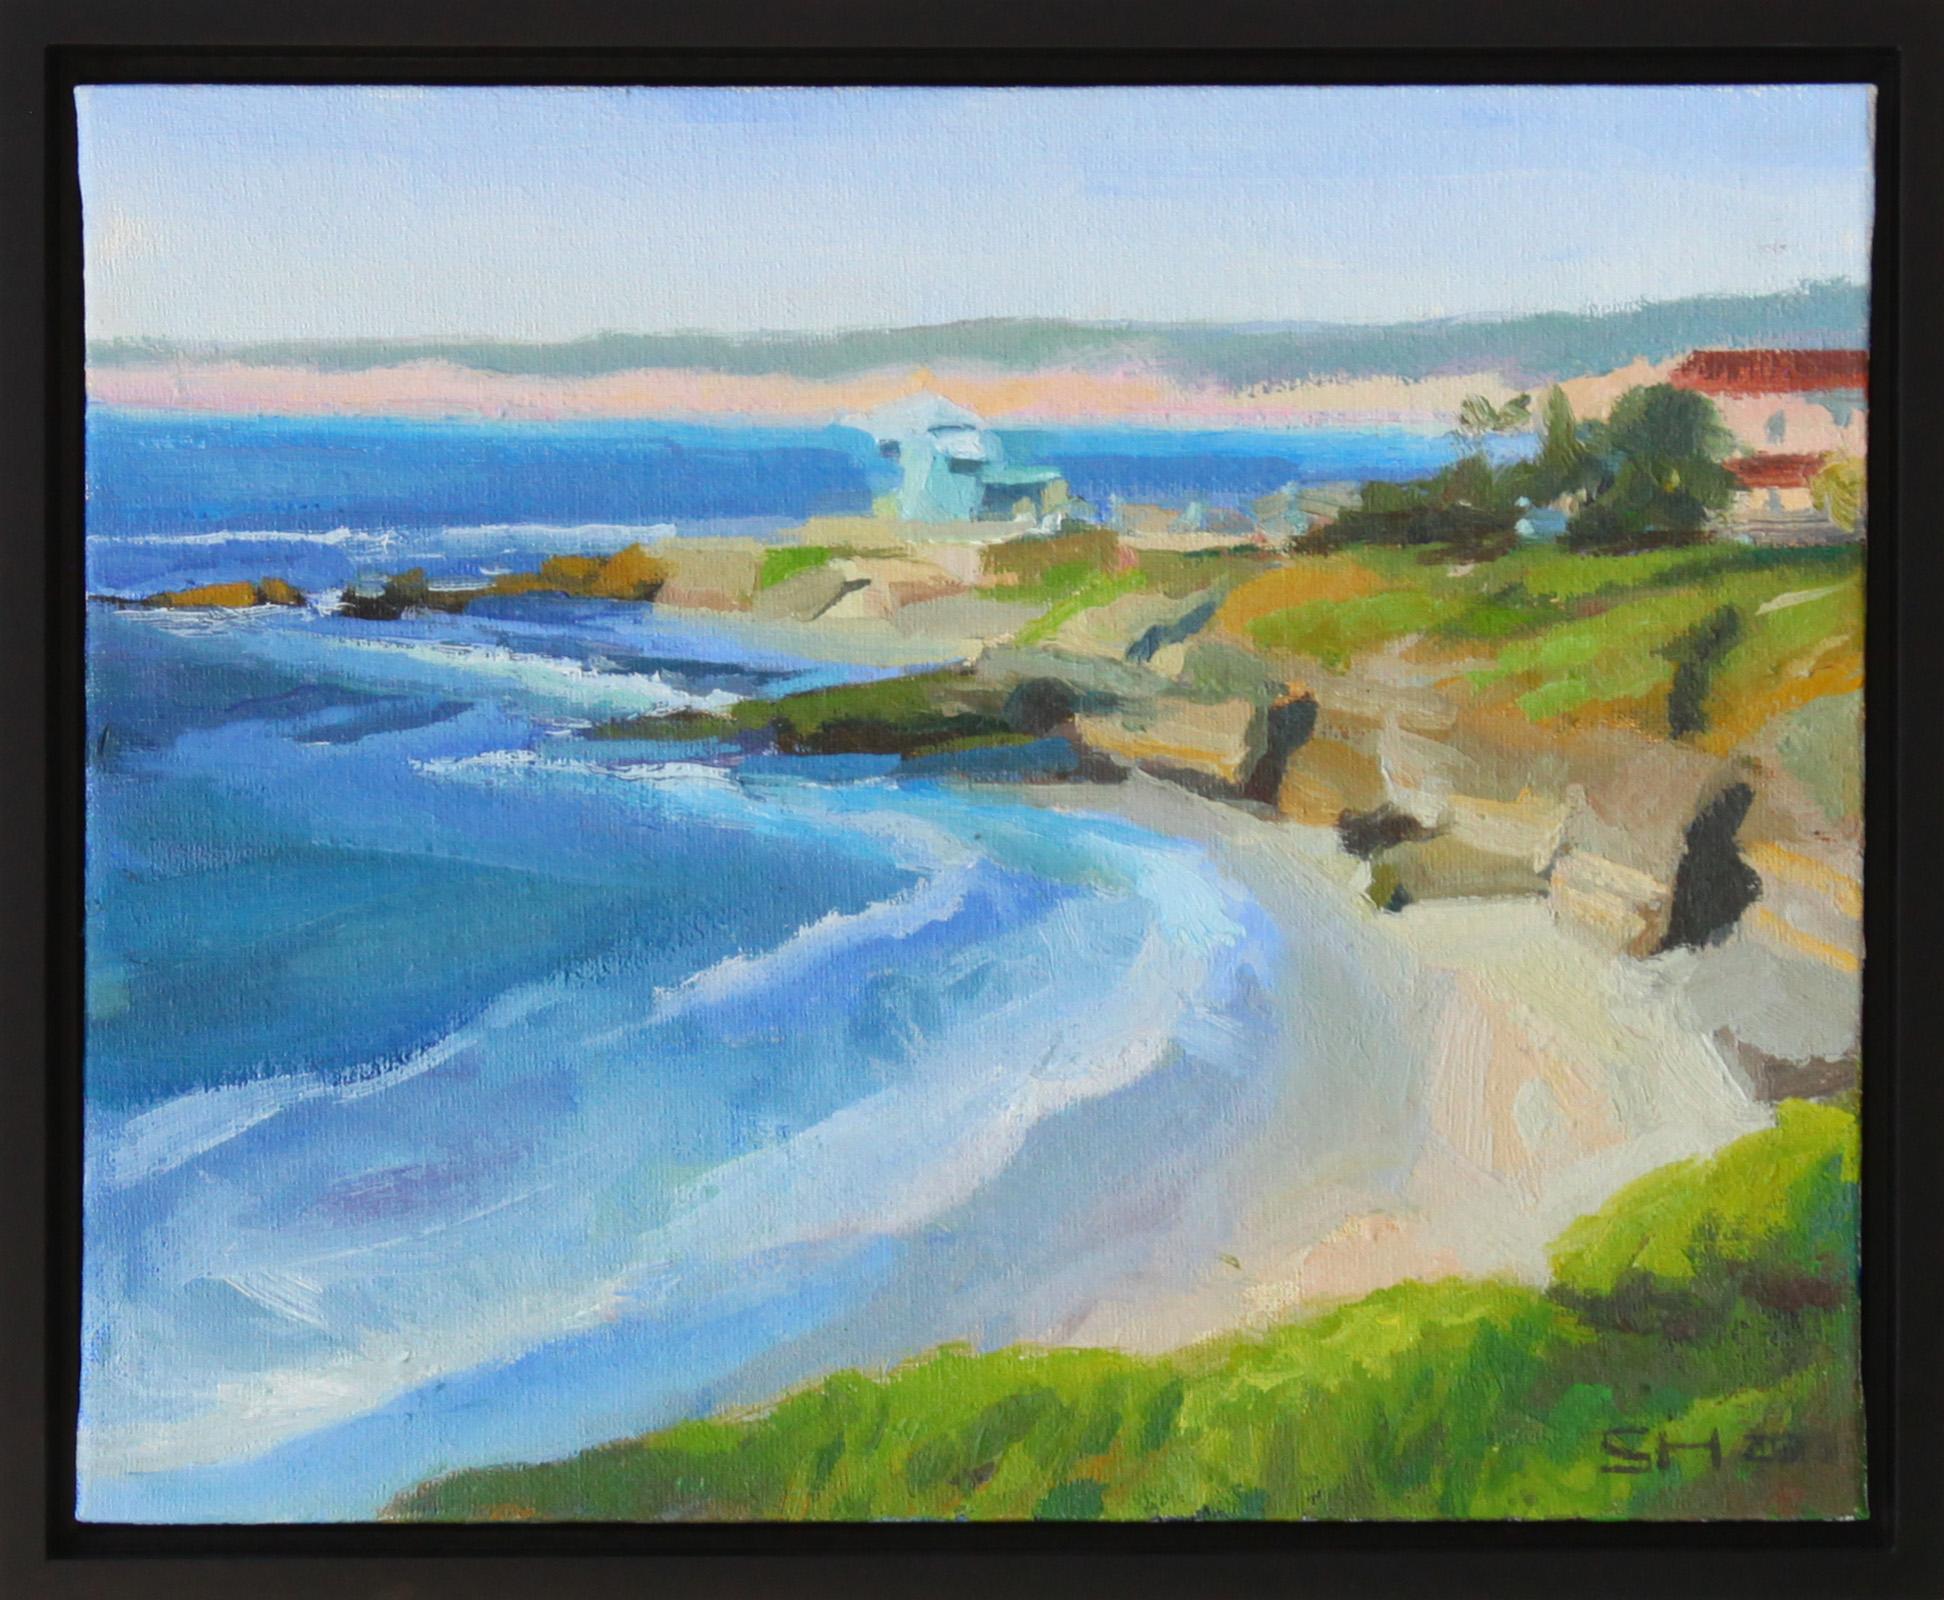 Sean Hnedak Landscape Painting - An Impressionist Oil on Canvas Seascape Painting, "Coastal Connection"